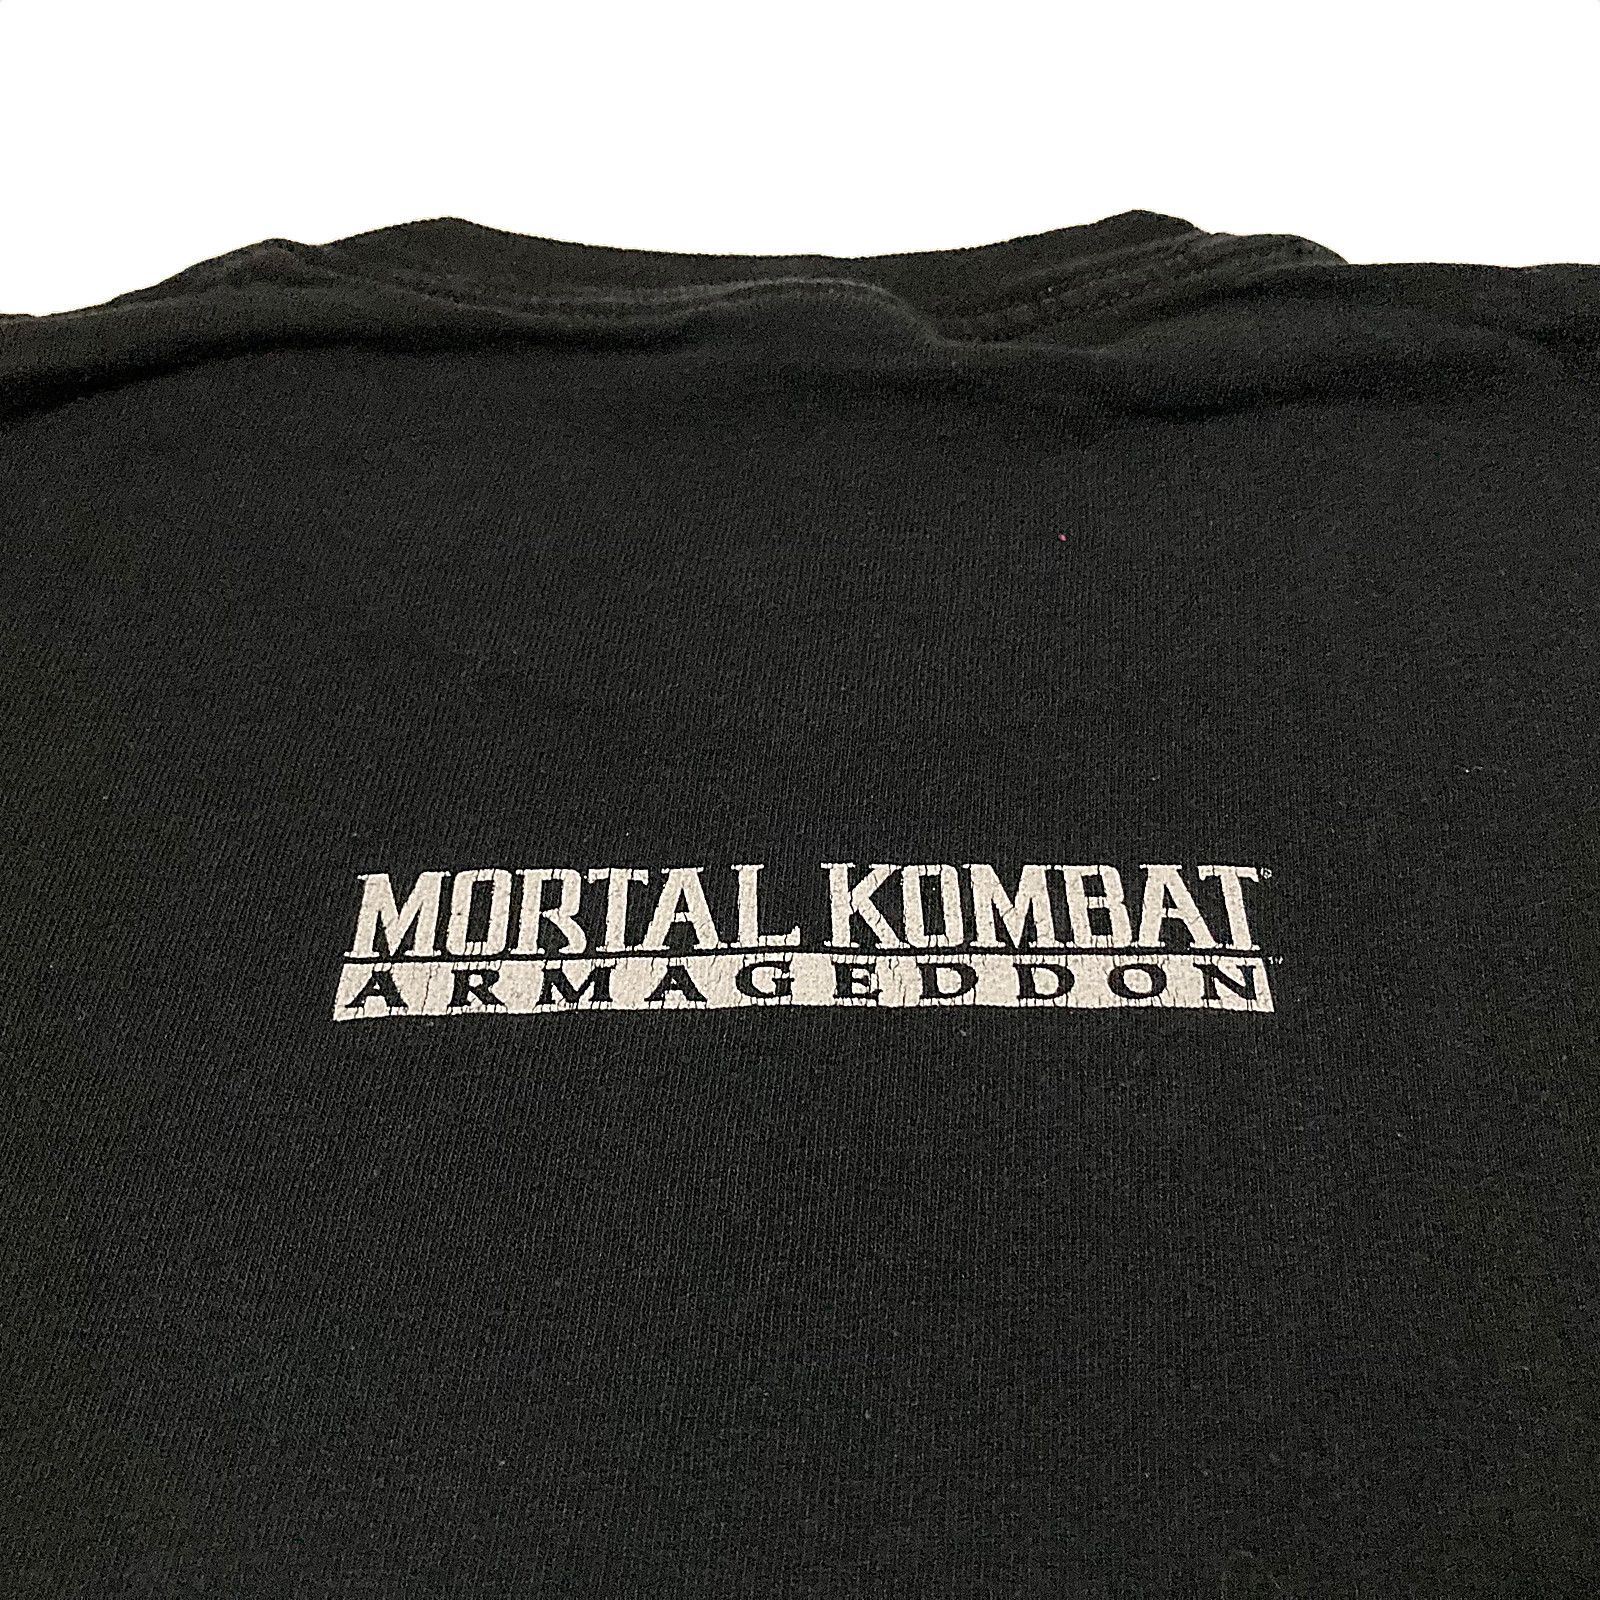 Vintage Vintage Mortal Kombat Armageddon T-Shirt Size US L / EU 52-54 / 3 - 4 Thumbnail